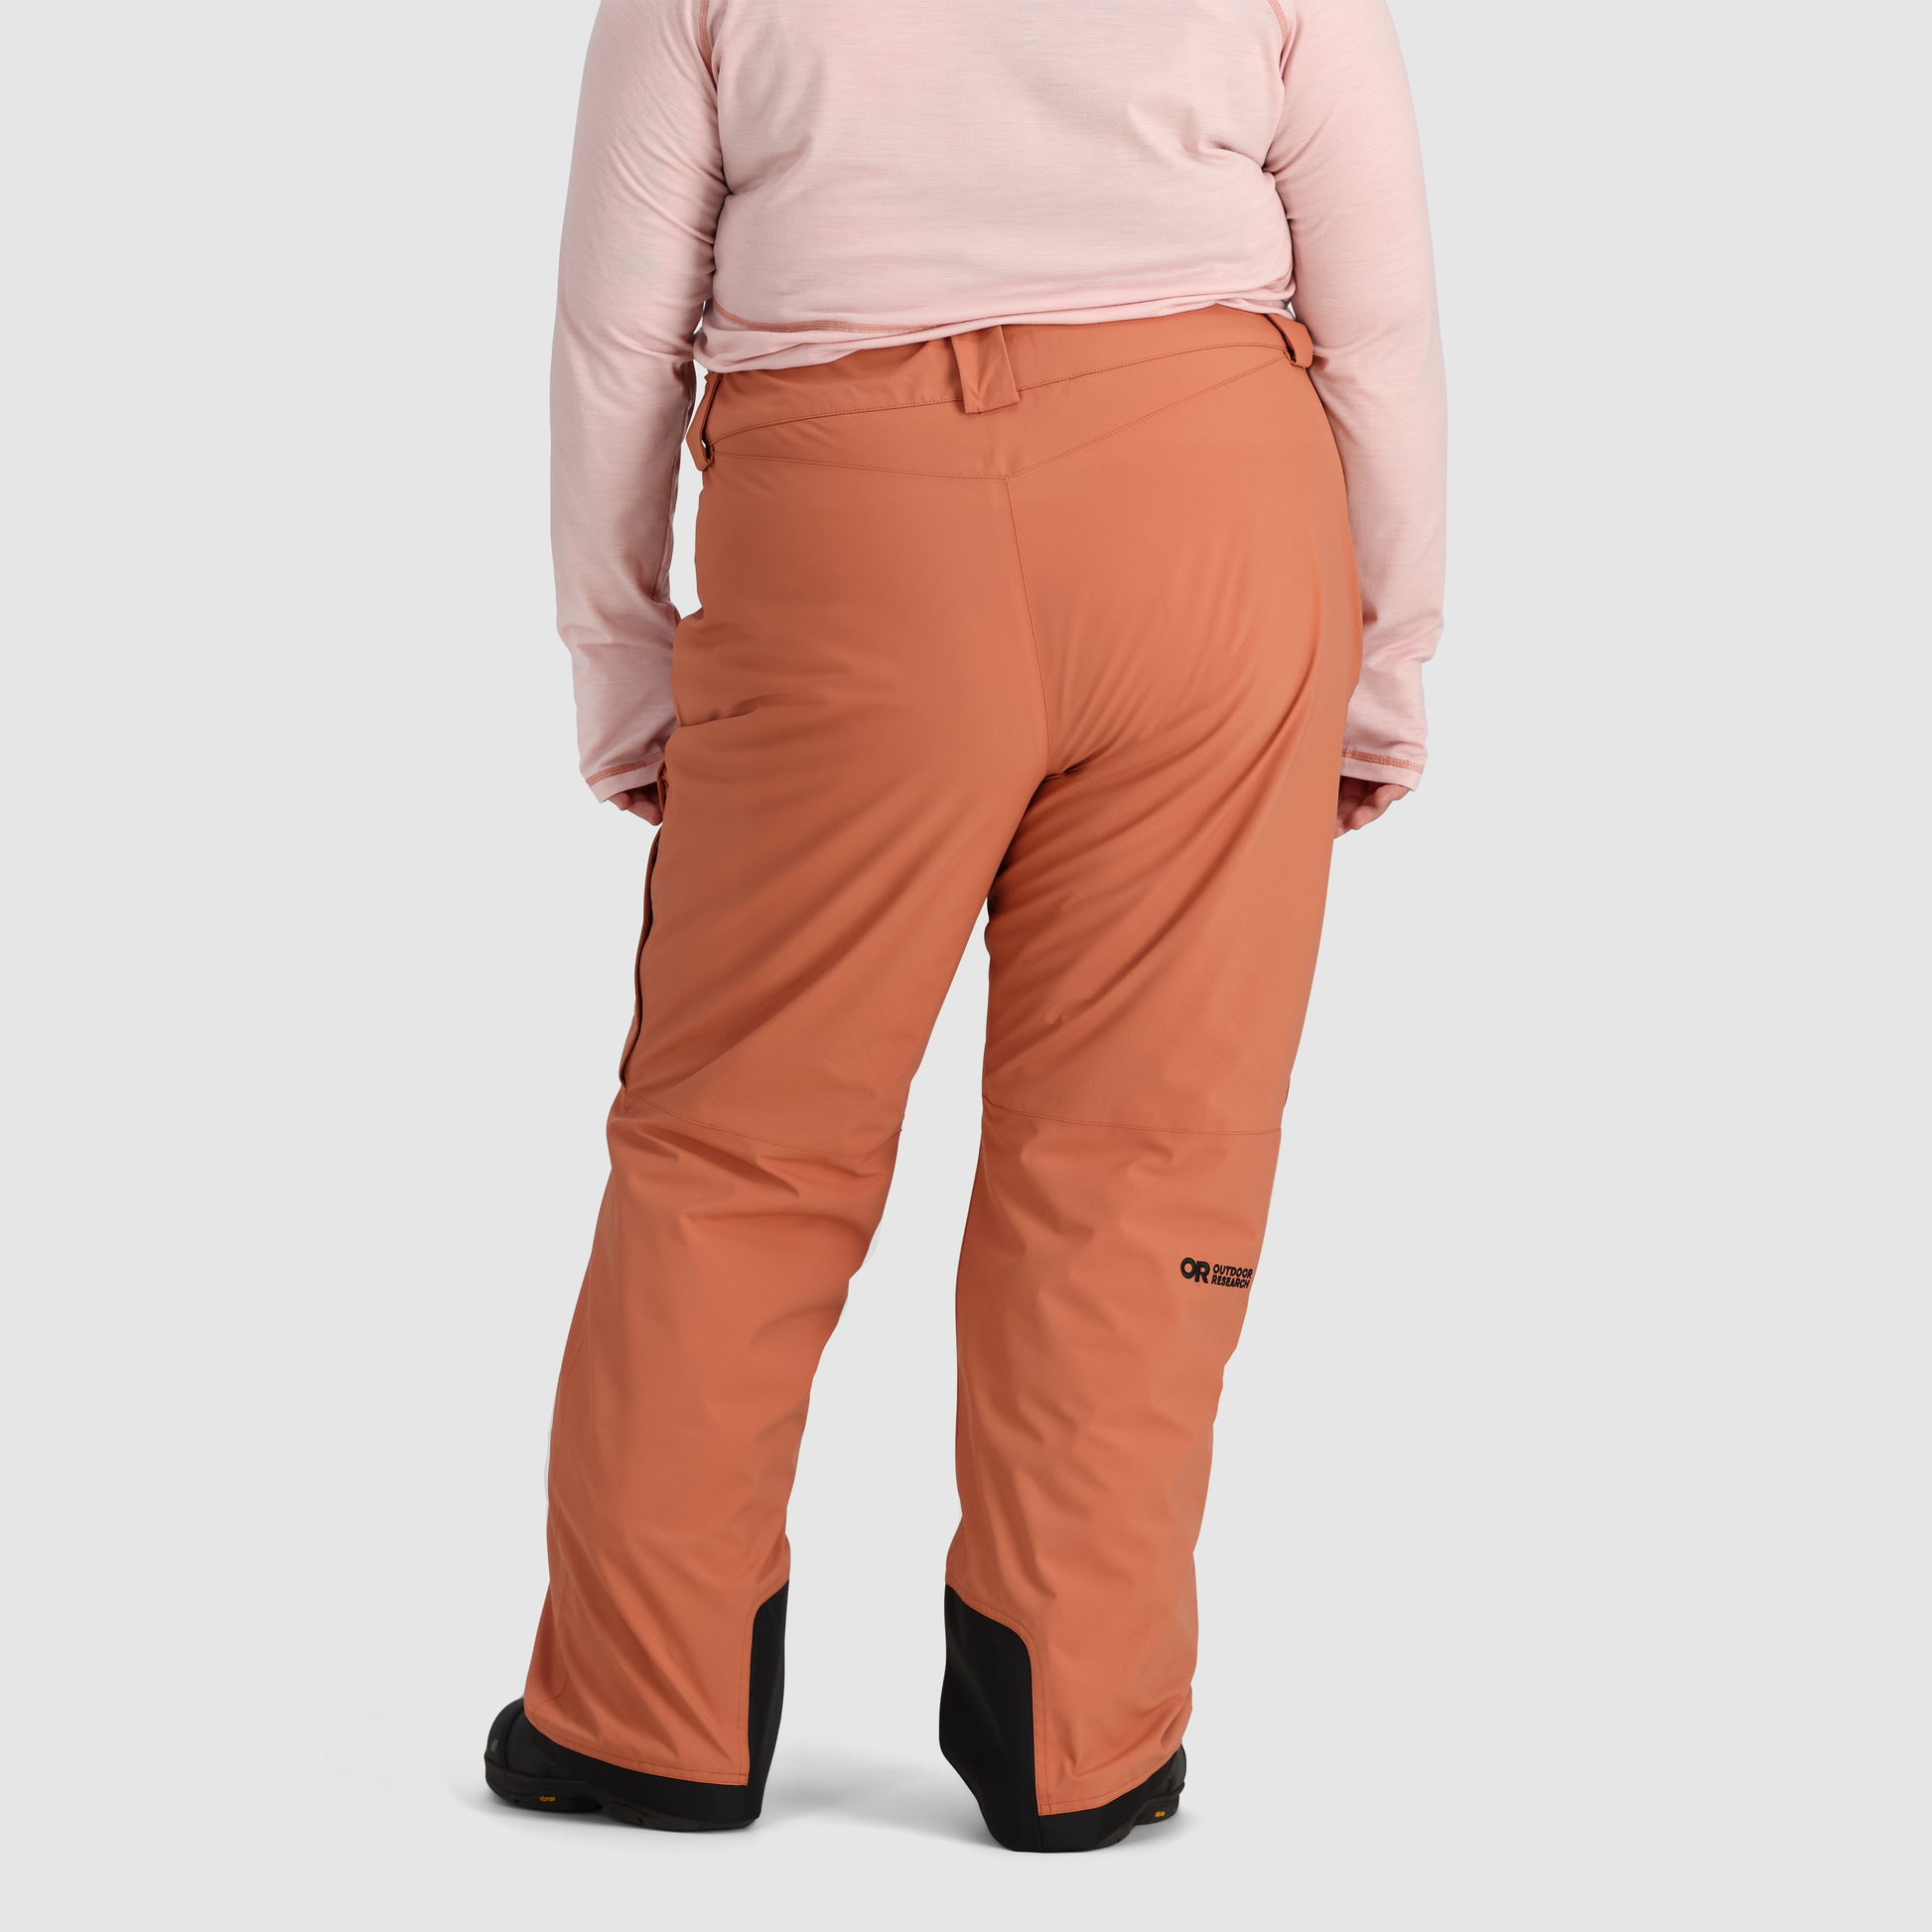 Hunter Pants Womens Small Orange White Tear Away Athletic Ladies BinQ